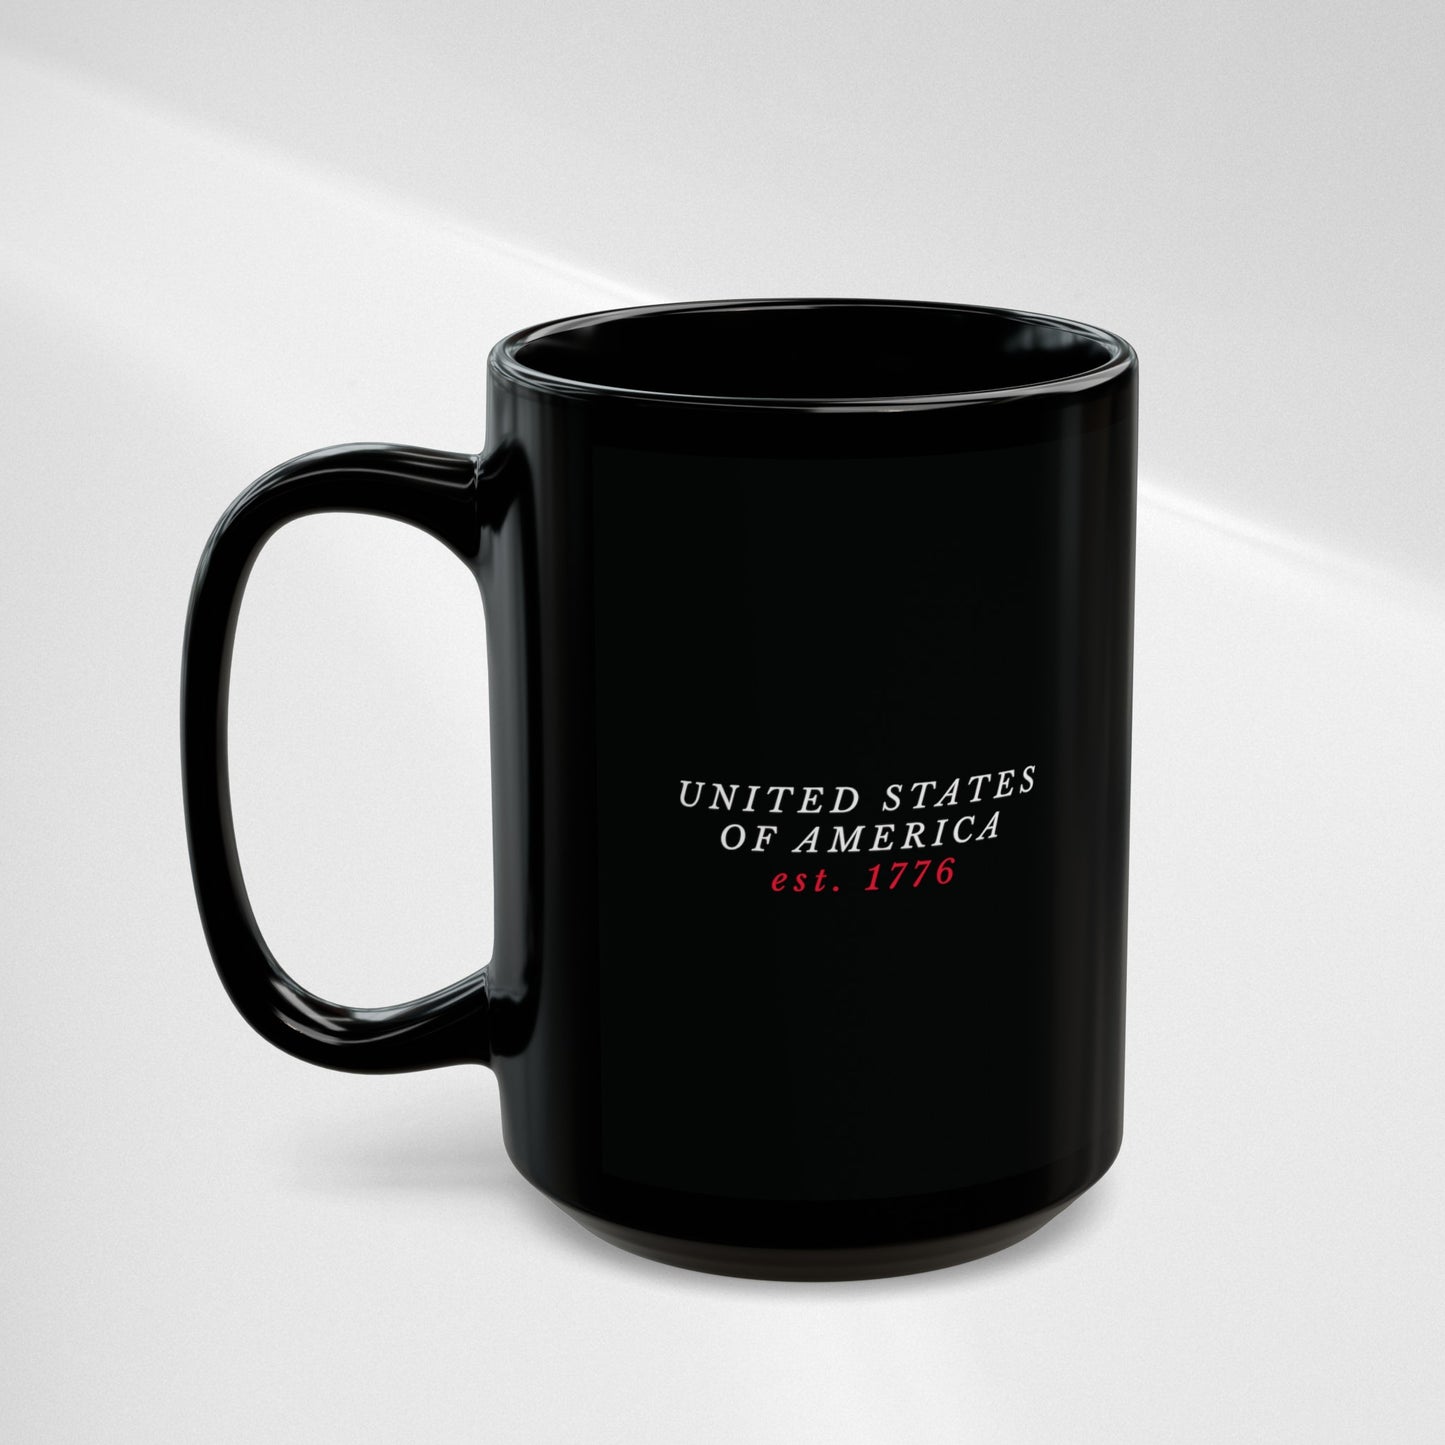 United States of America est. 1776 Black Mug (11oz, 15oz)